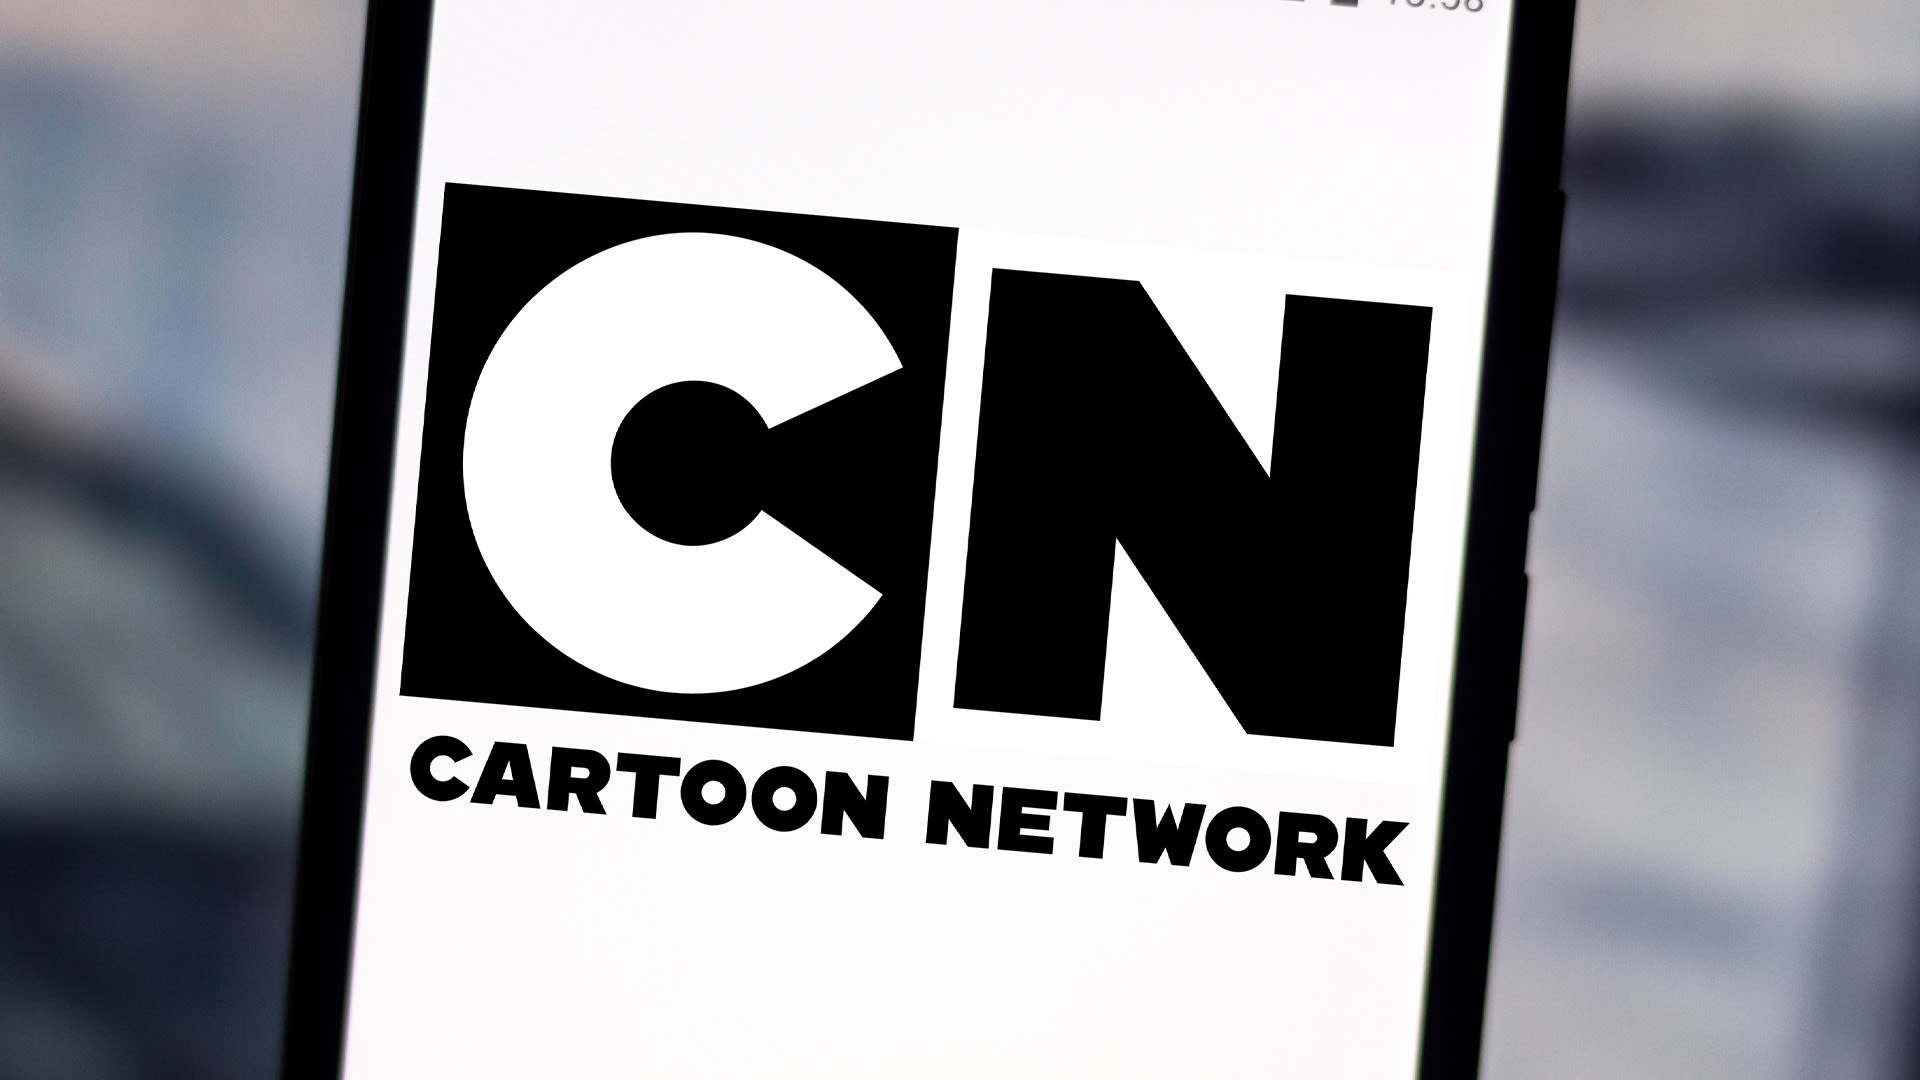 Cartoon Network brings back beloved show after decade-long hiatus